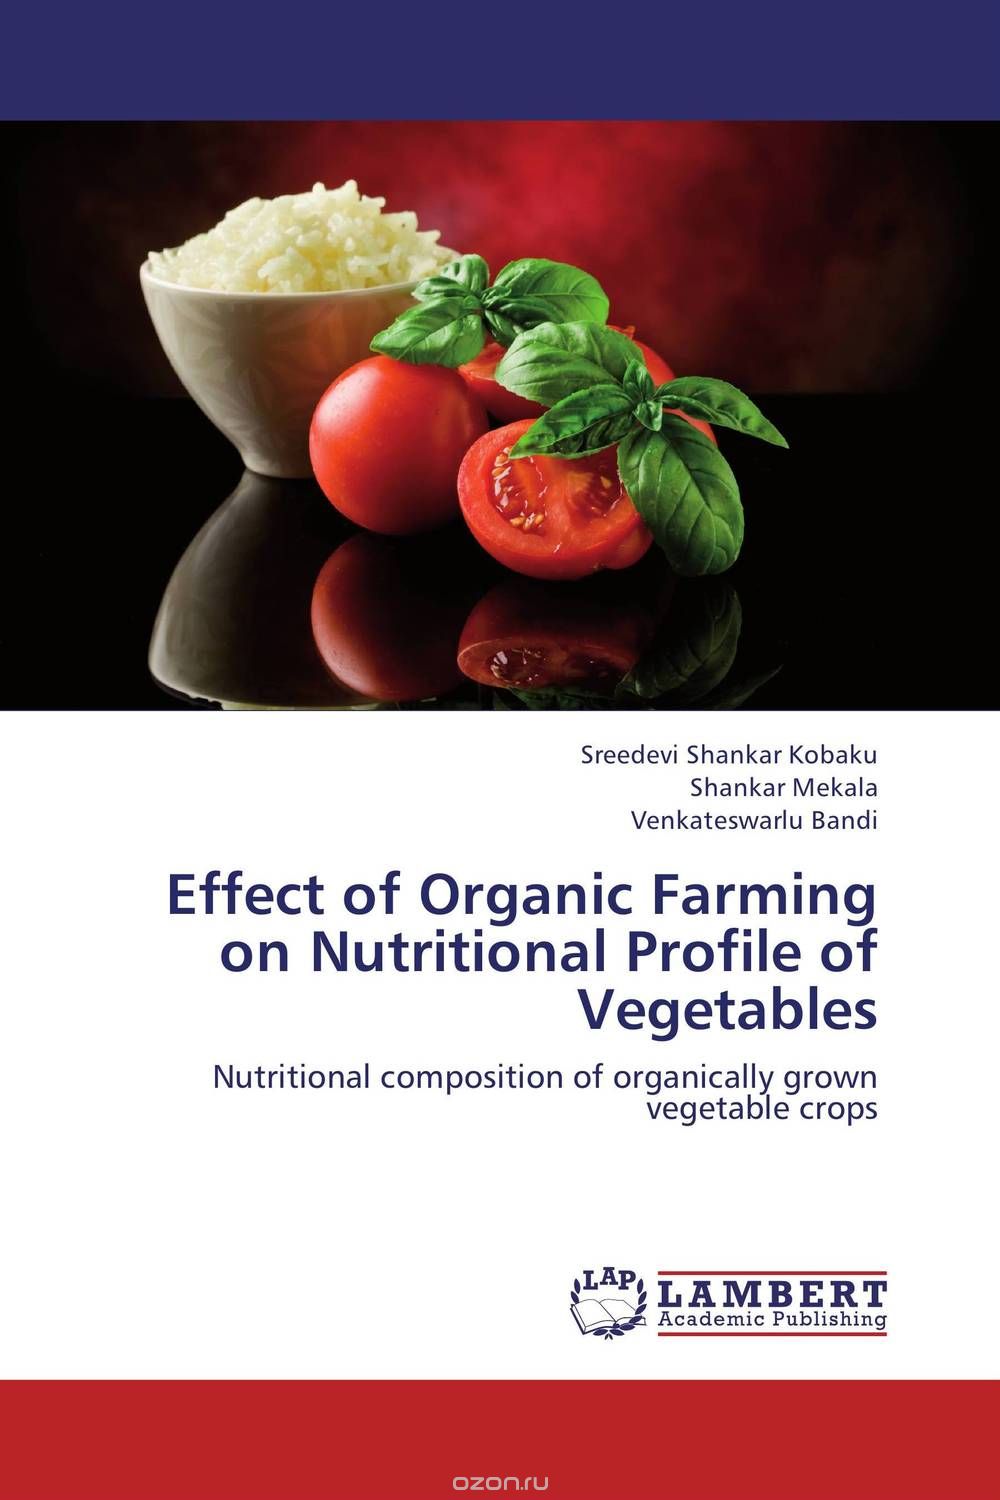 Скачать книгу "Effect of Organic Farming on Nutritional Profile of Vegetables"